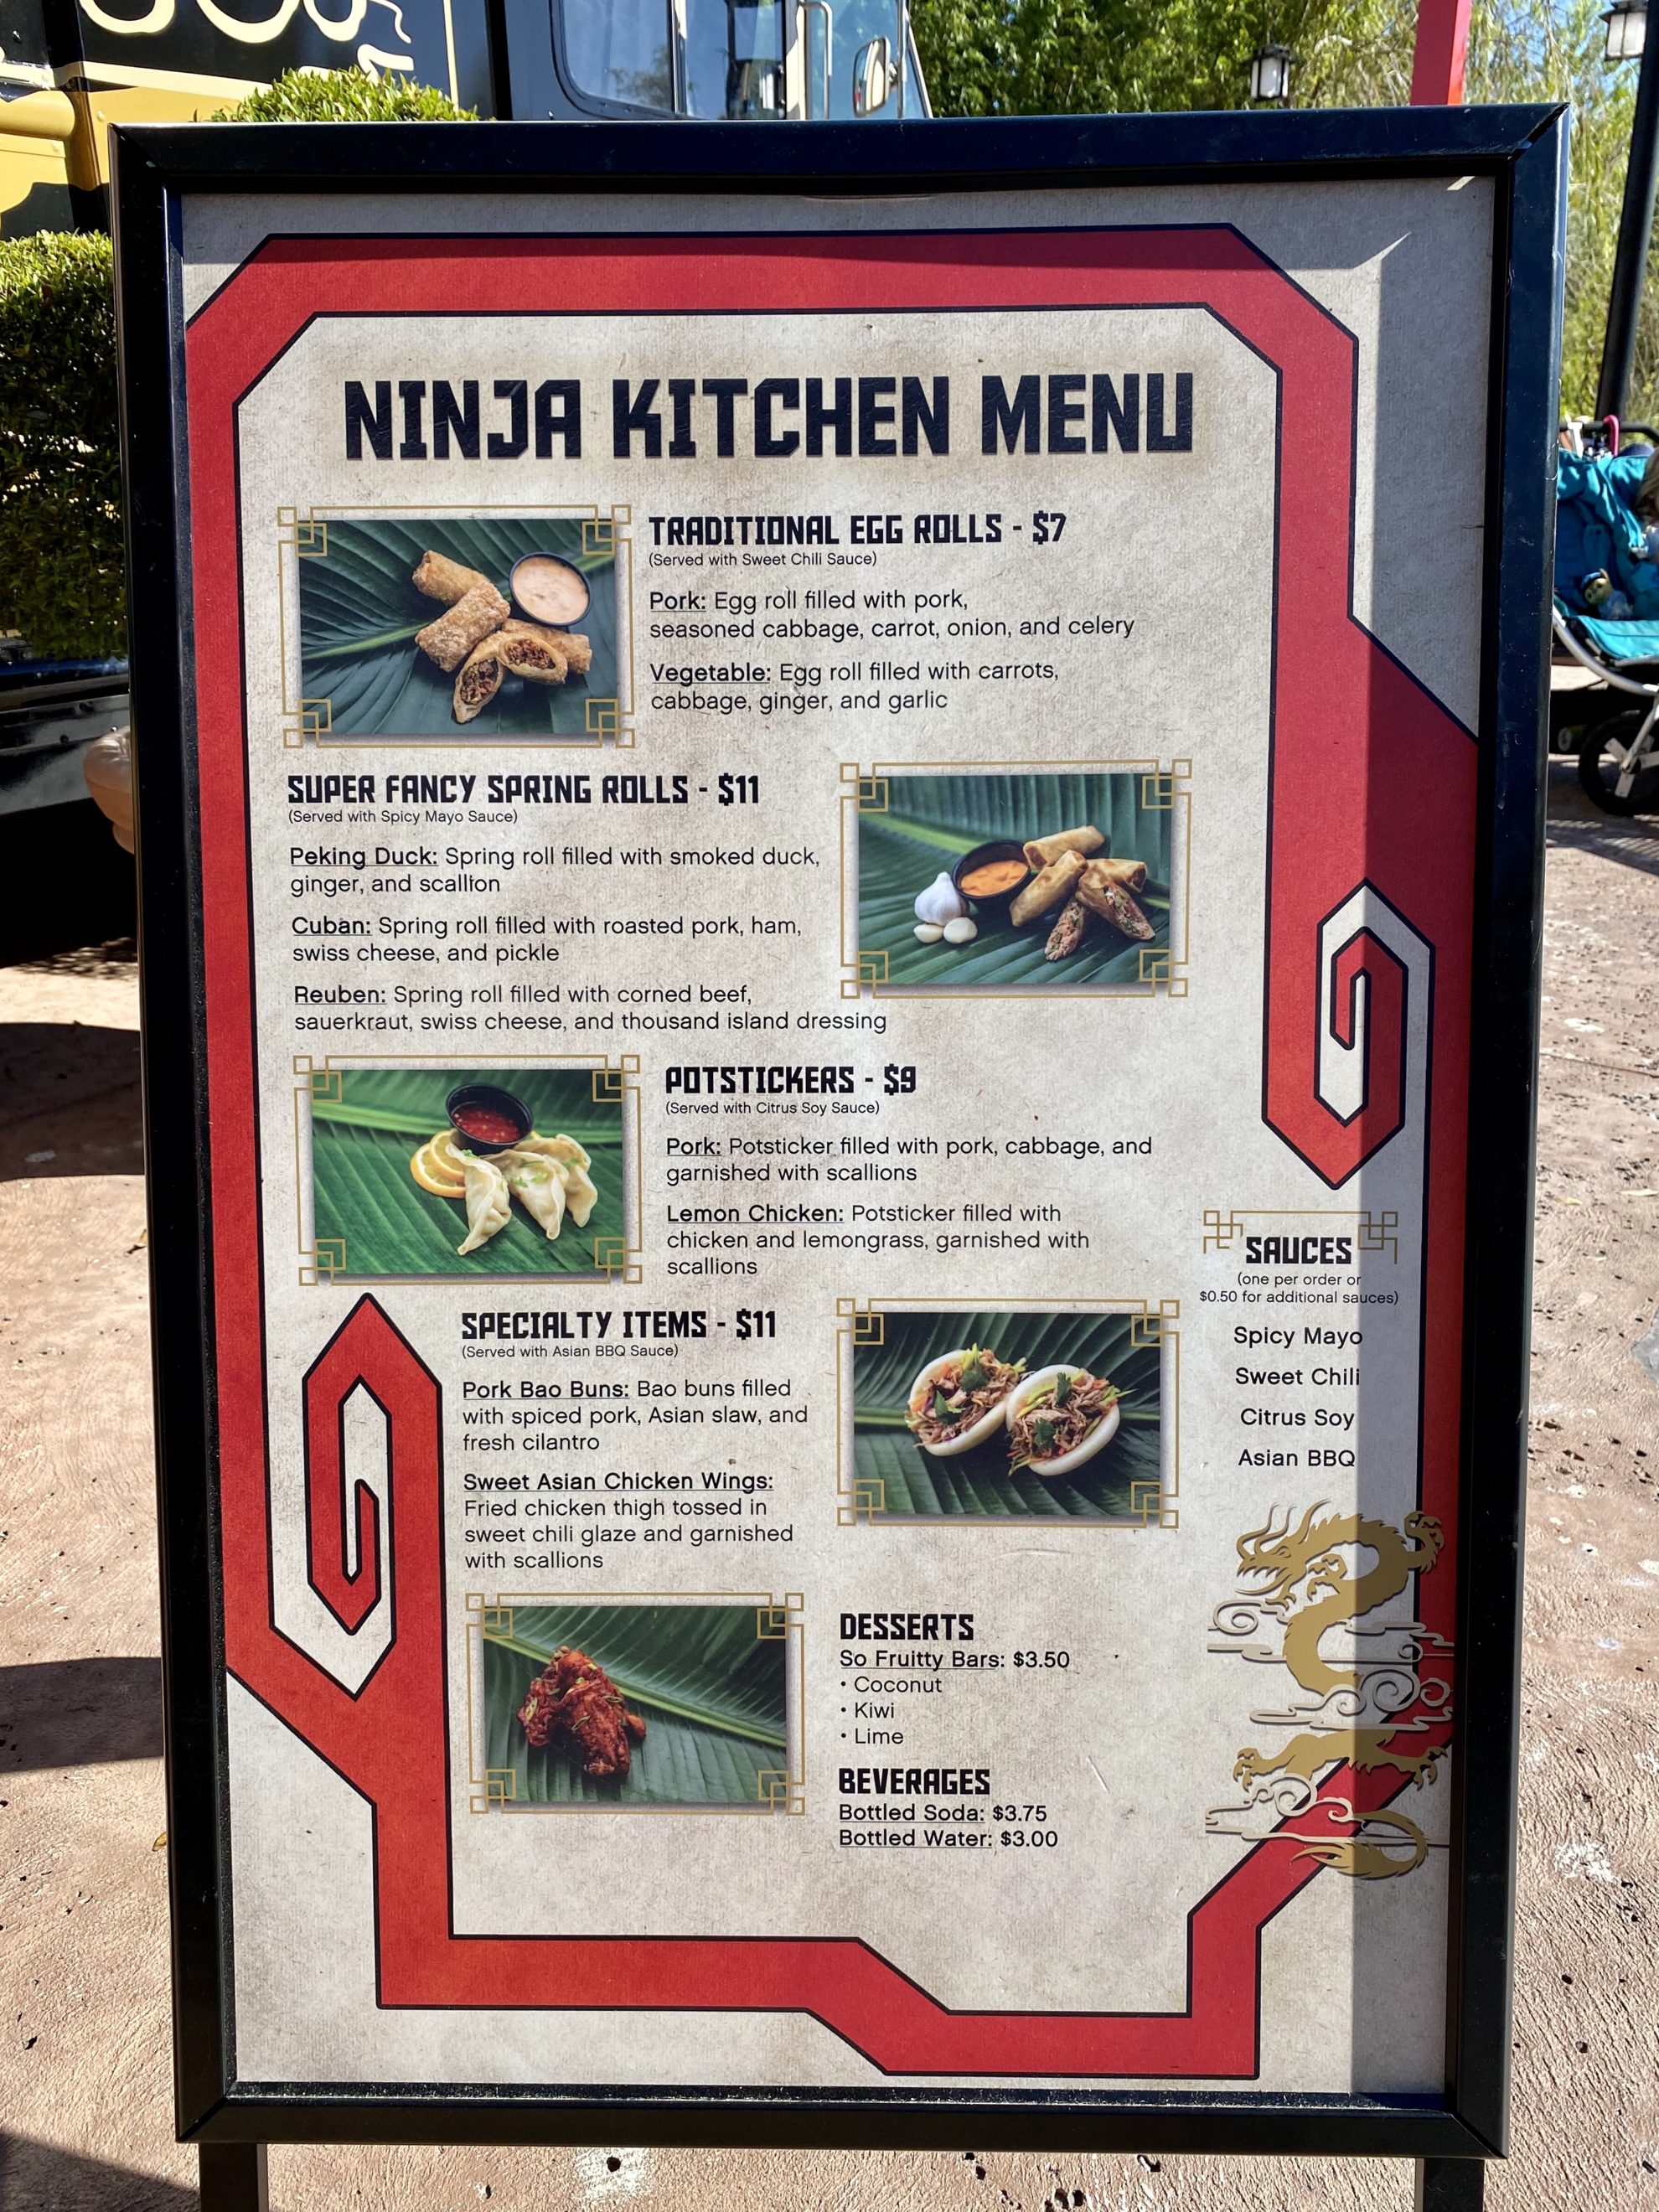 Sandwich board with ninja kitchen menu.